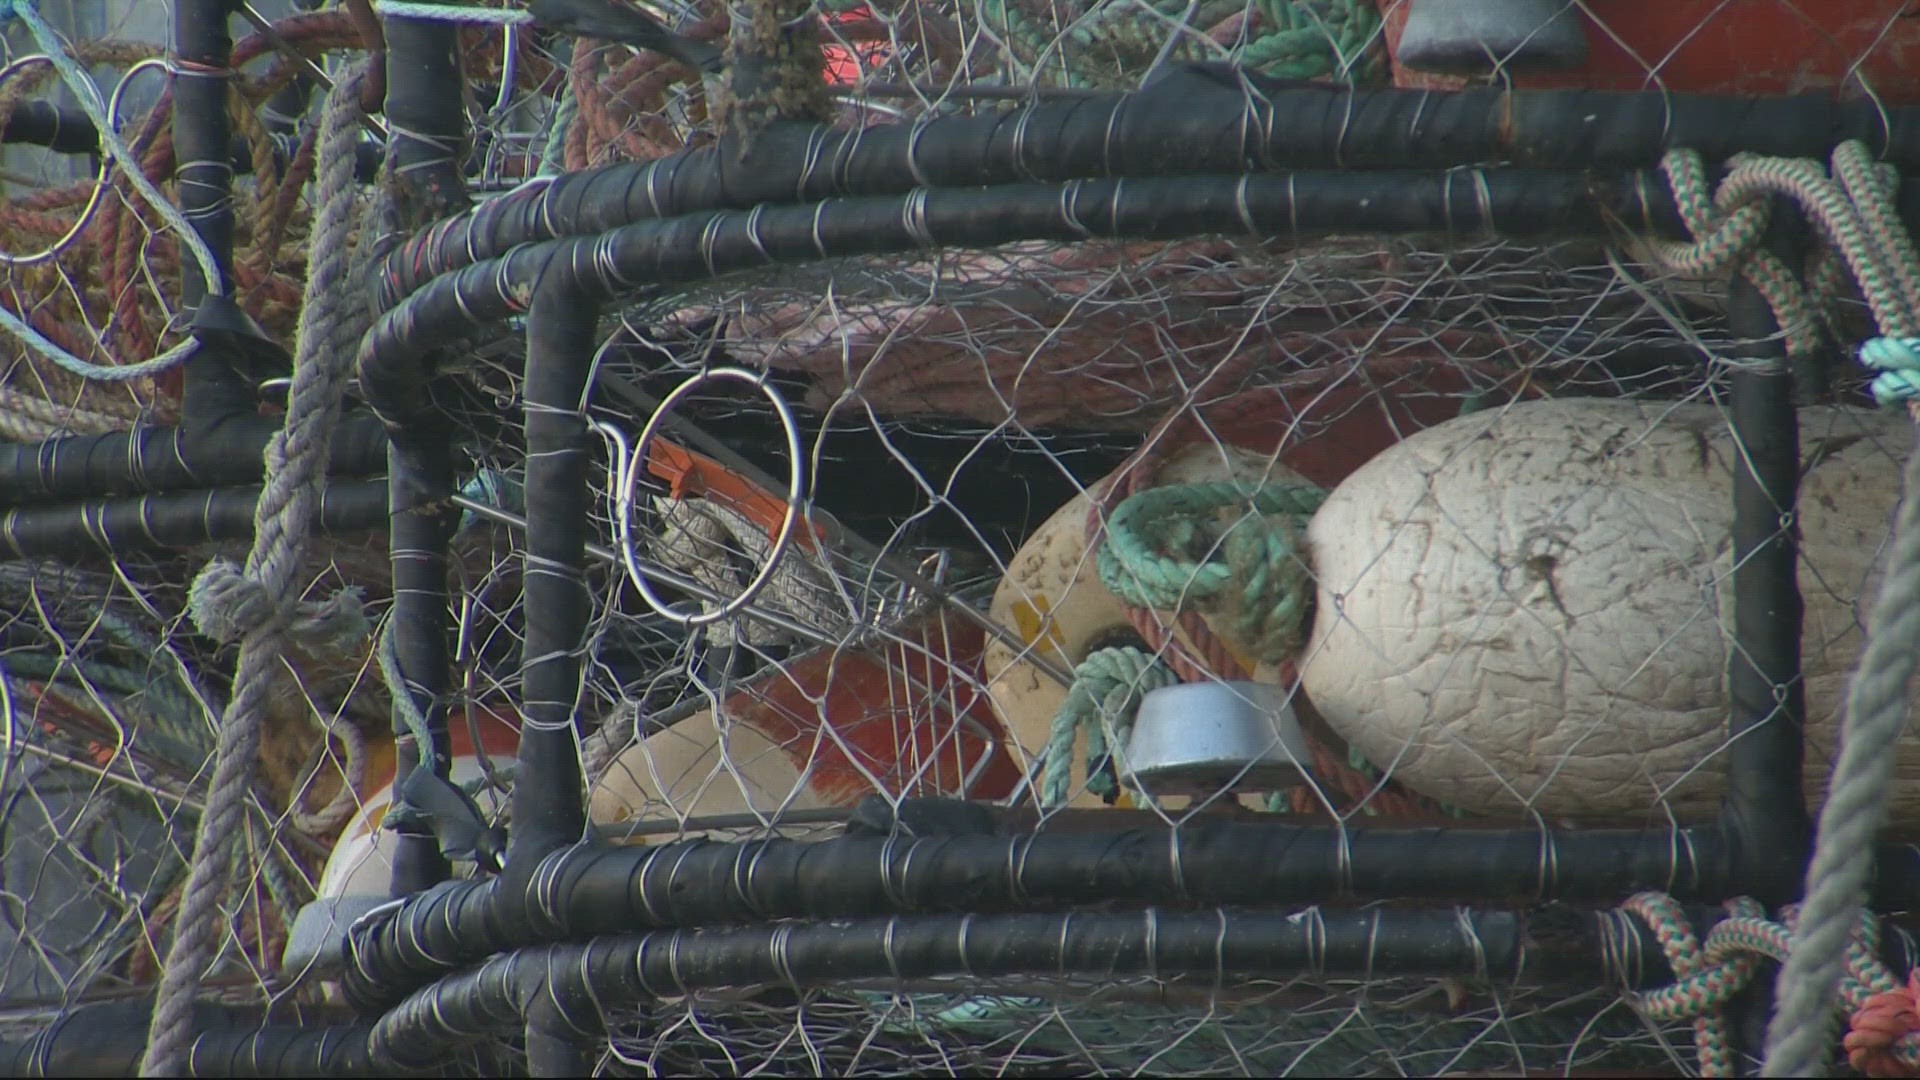 Dungeness crab season on Oregon coast kicks off after delays